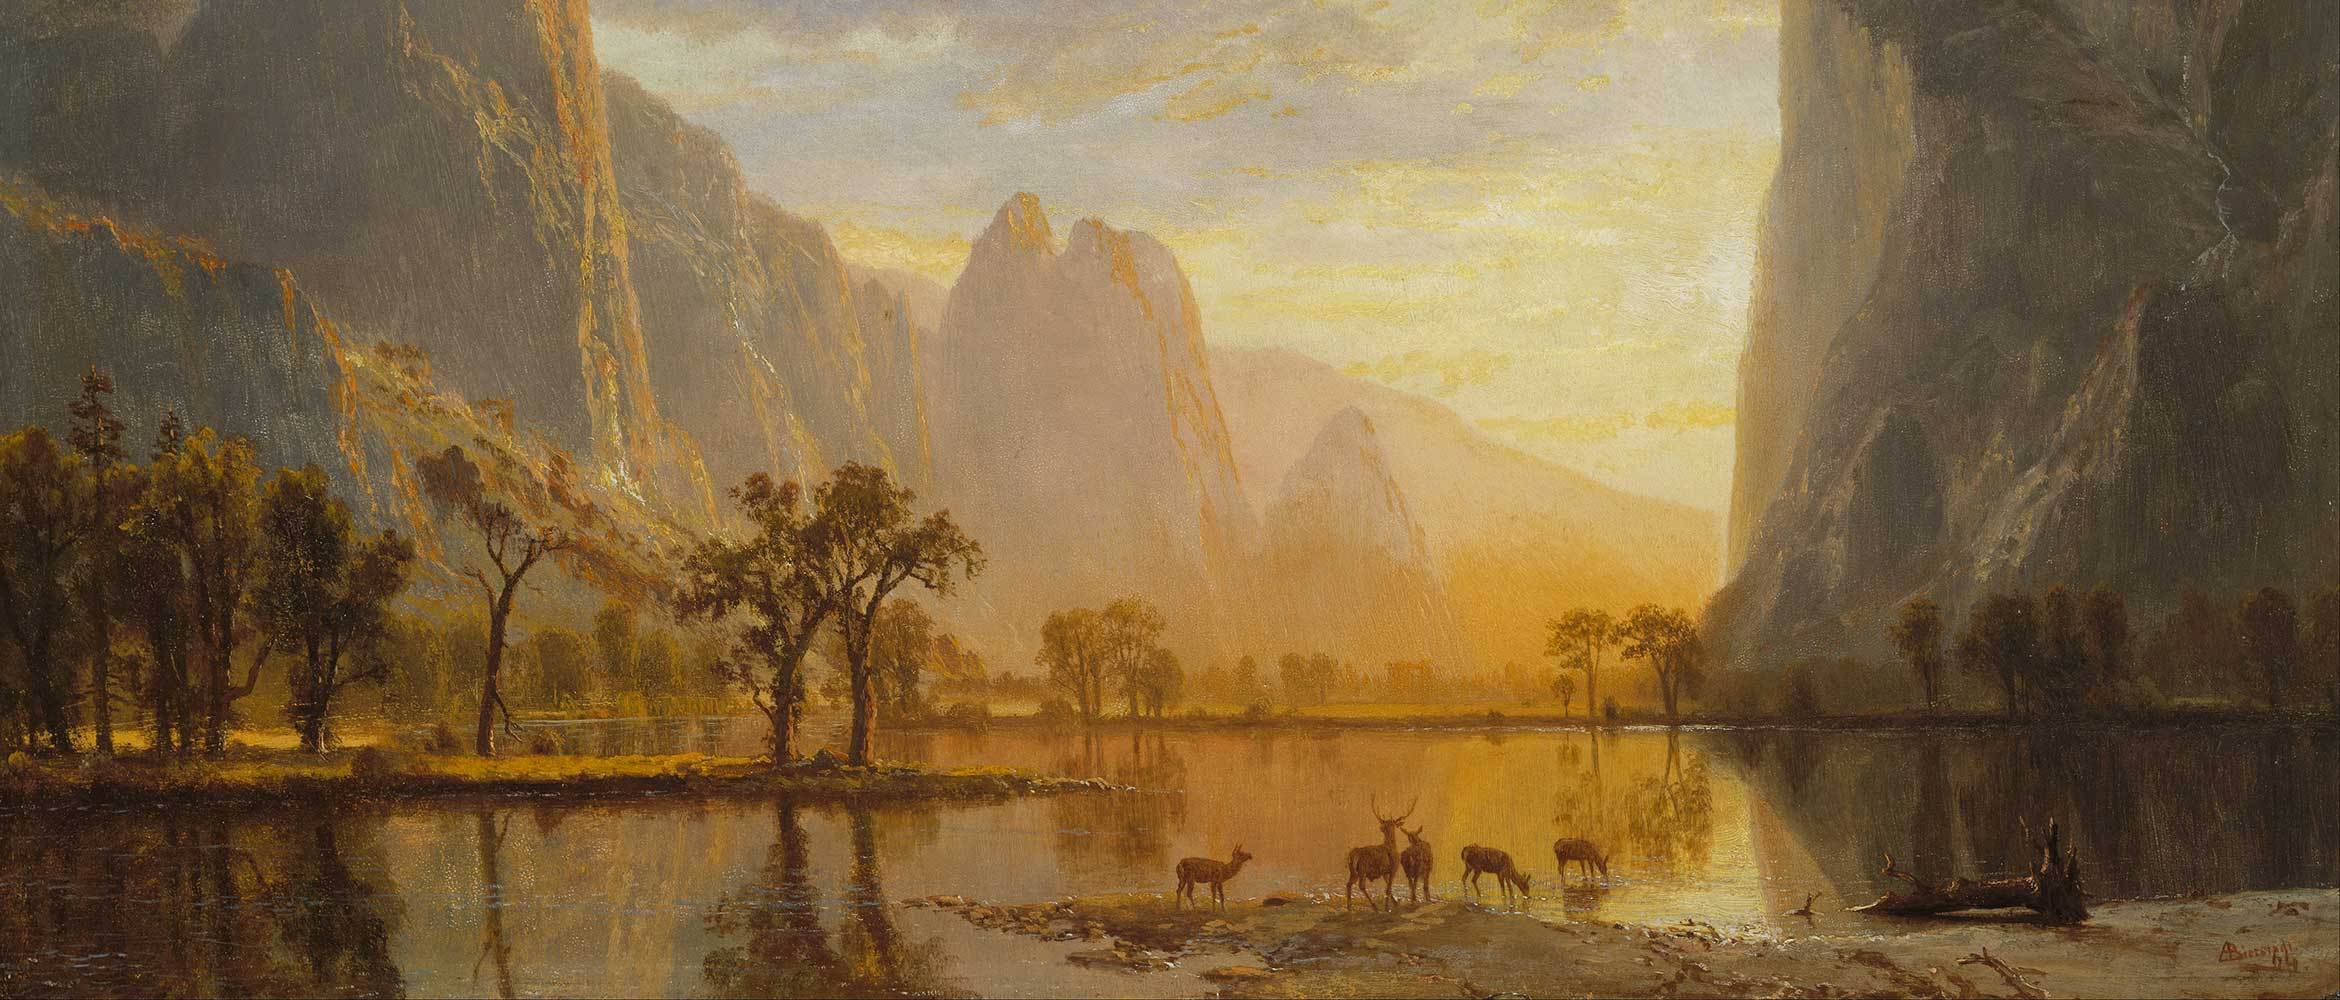 Albert Bierstadt: The Landscape Master | WildBounds